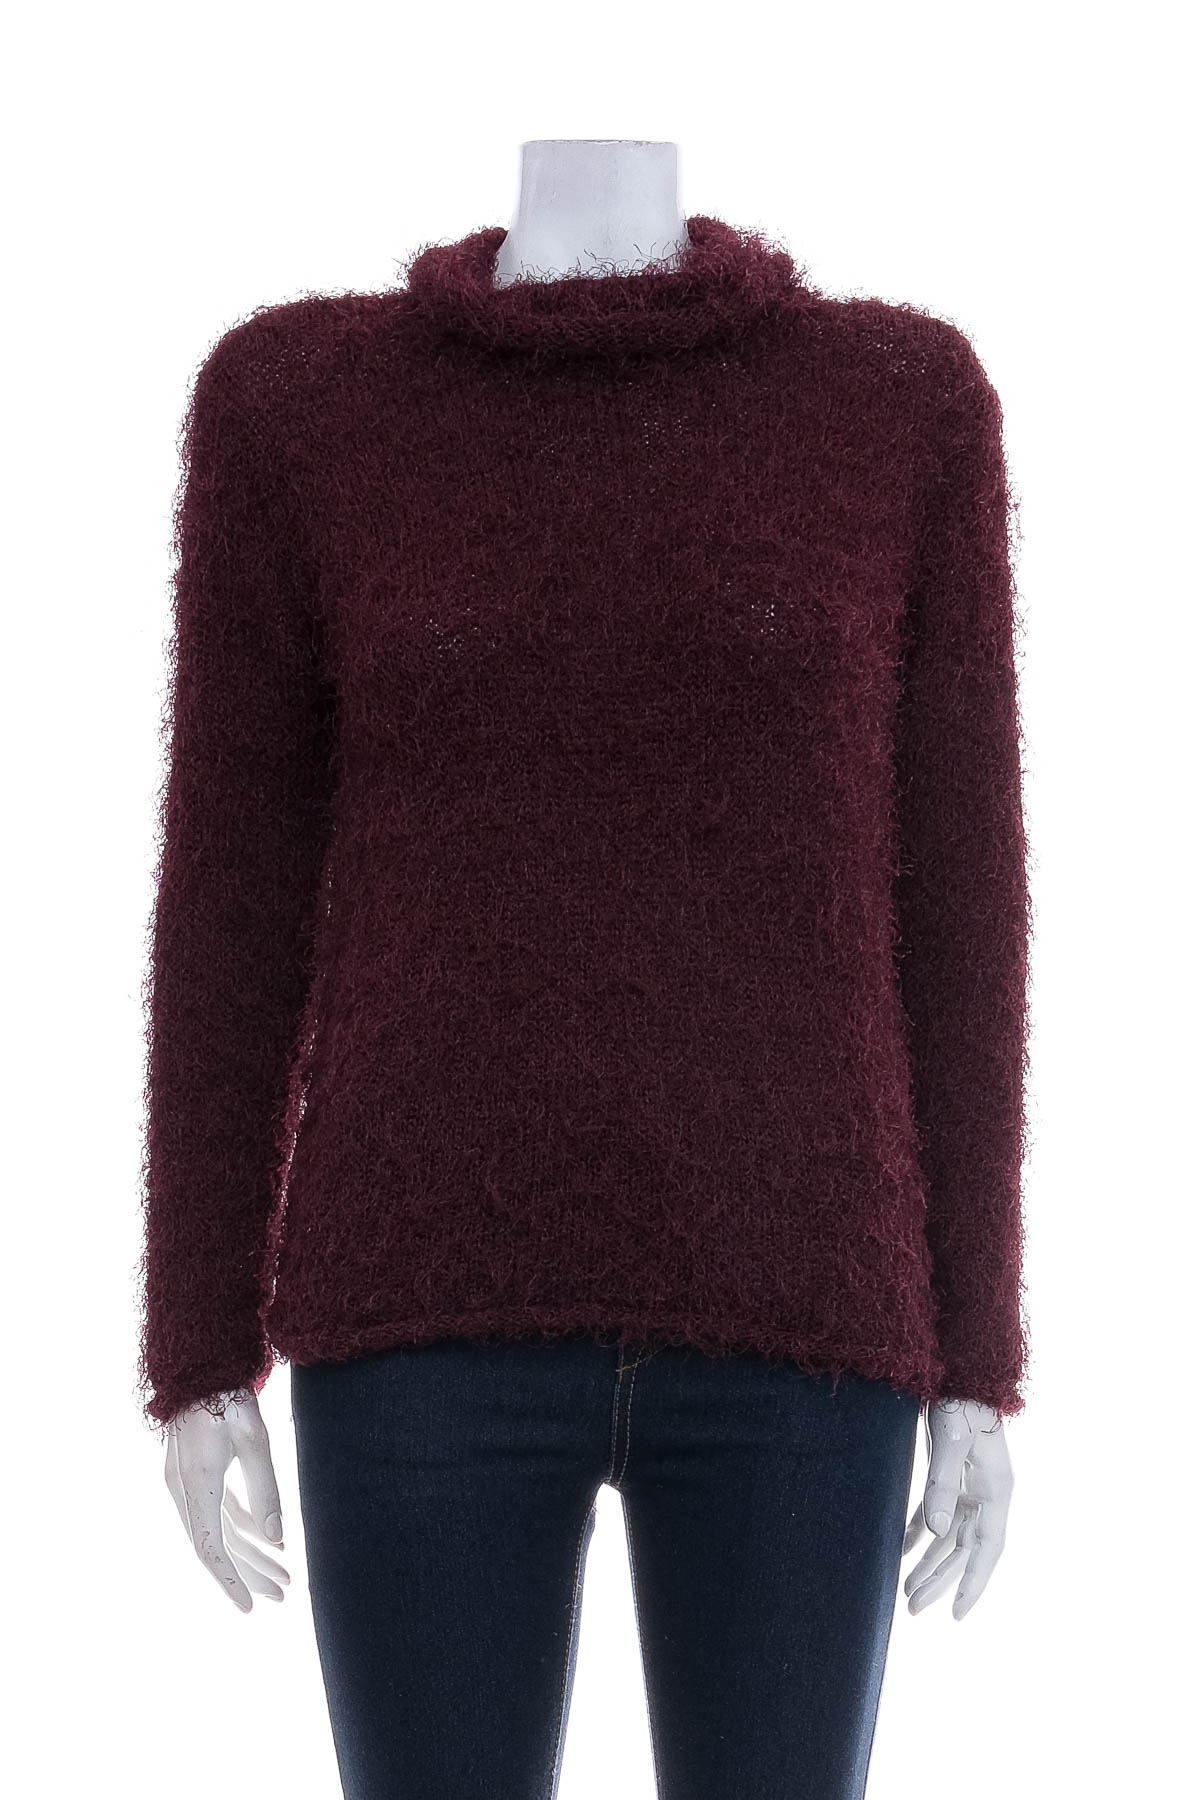 Women's sweater - Pia Parest - 0